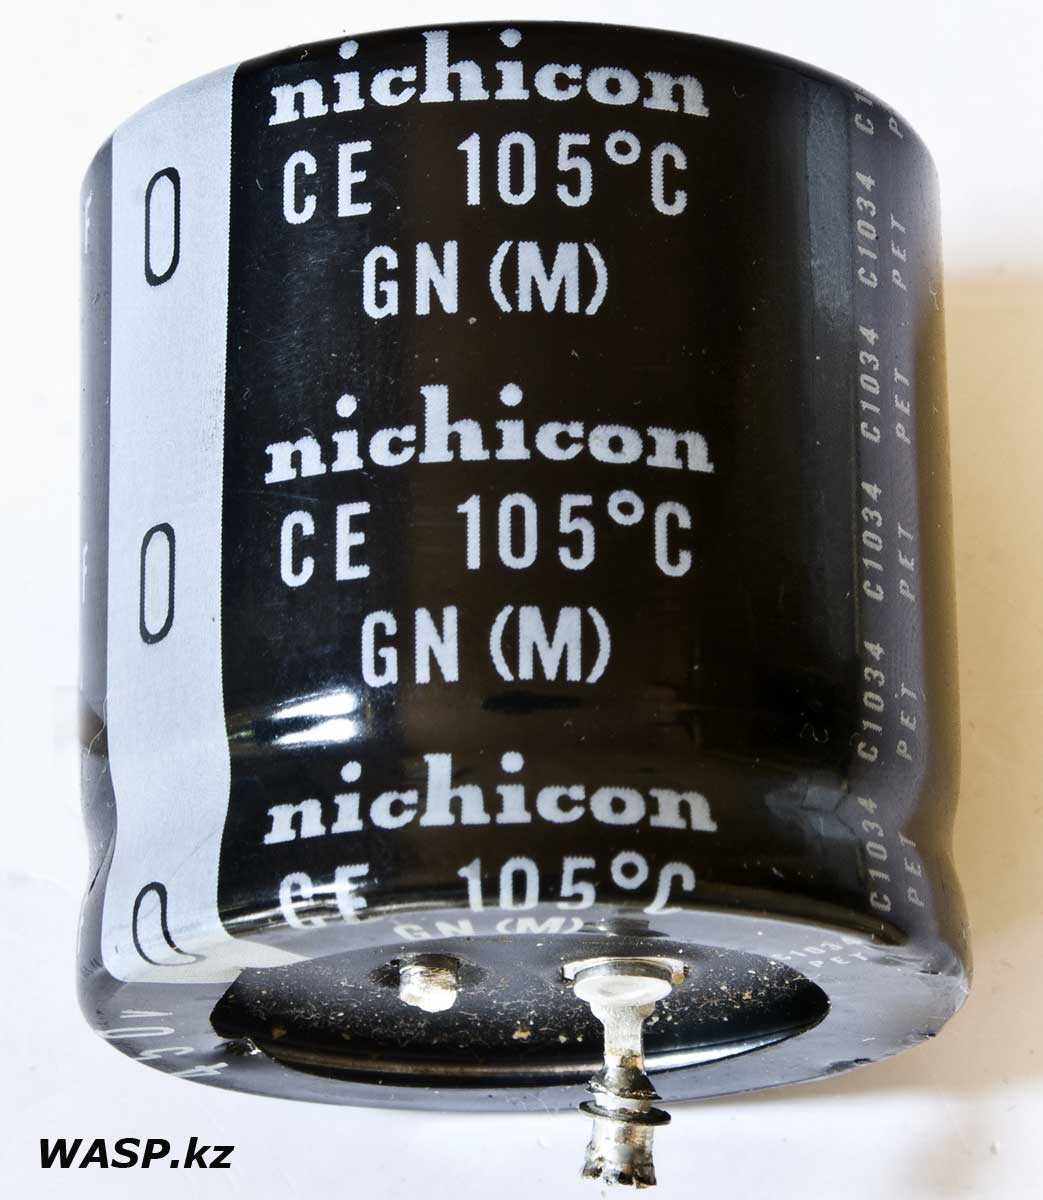 Nichicon конденсатор CE 105C серия GN (M) полное описание